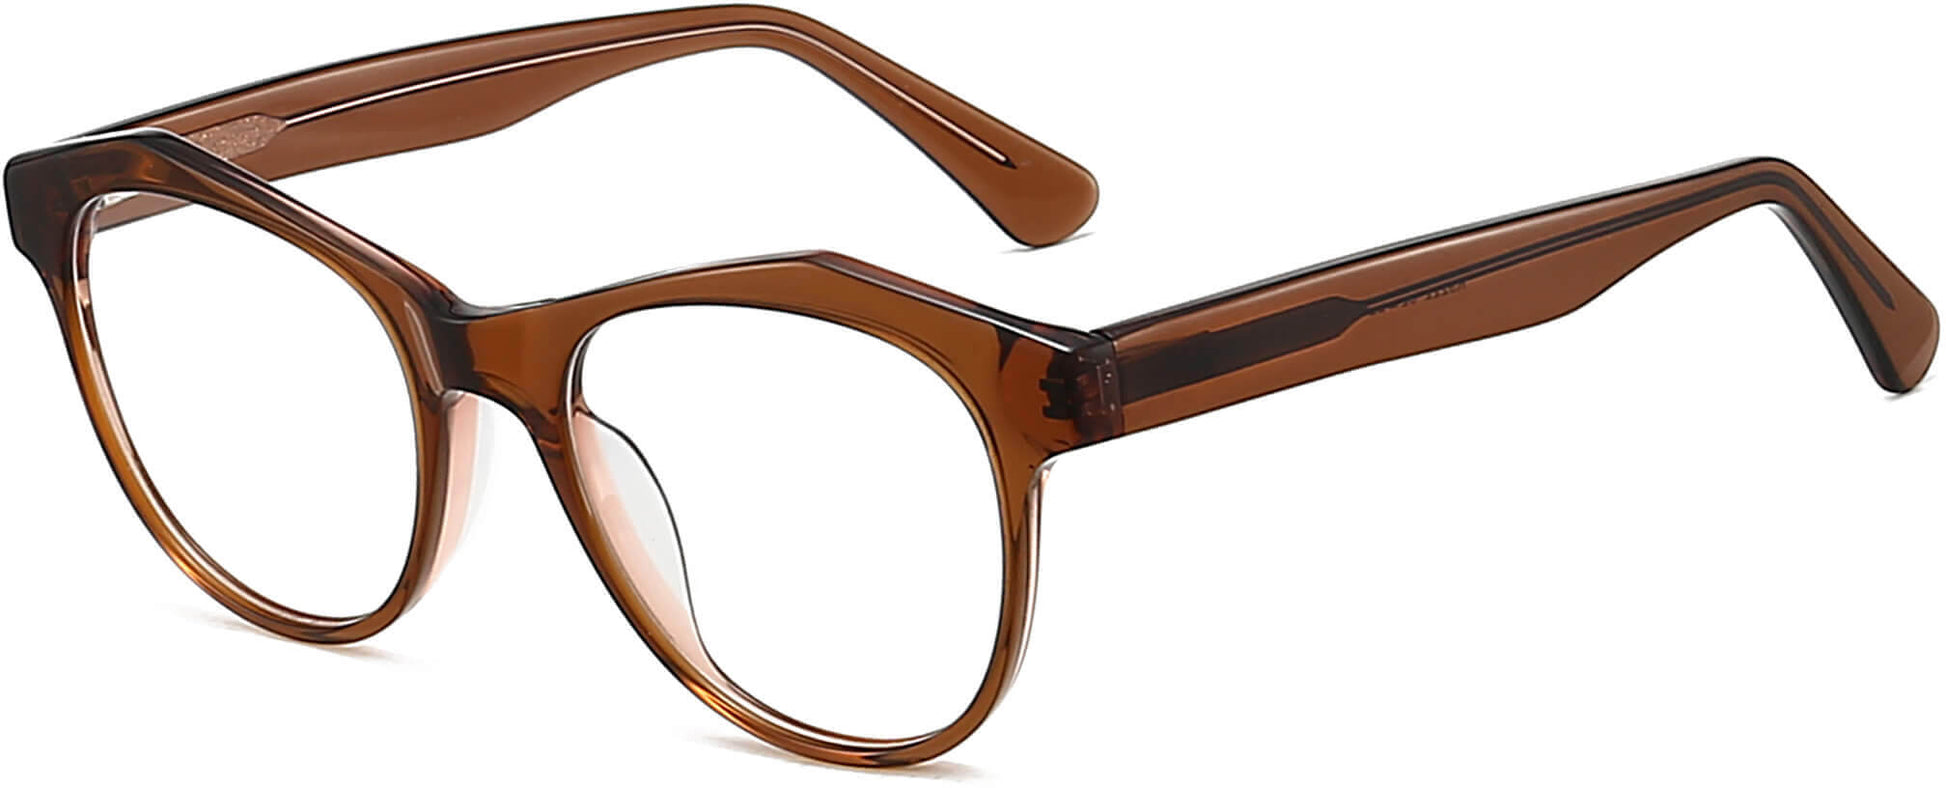 Myranda Cateye Brown Eyeglasses from ANRRI, angle view